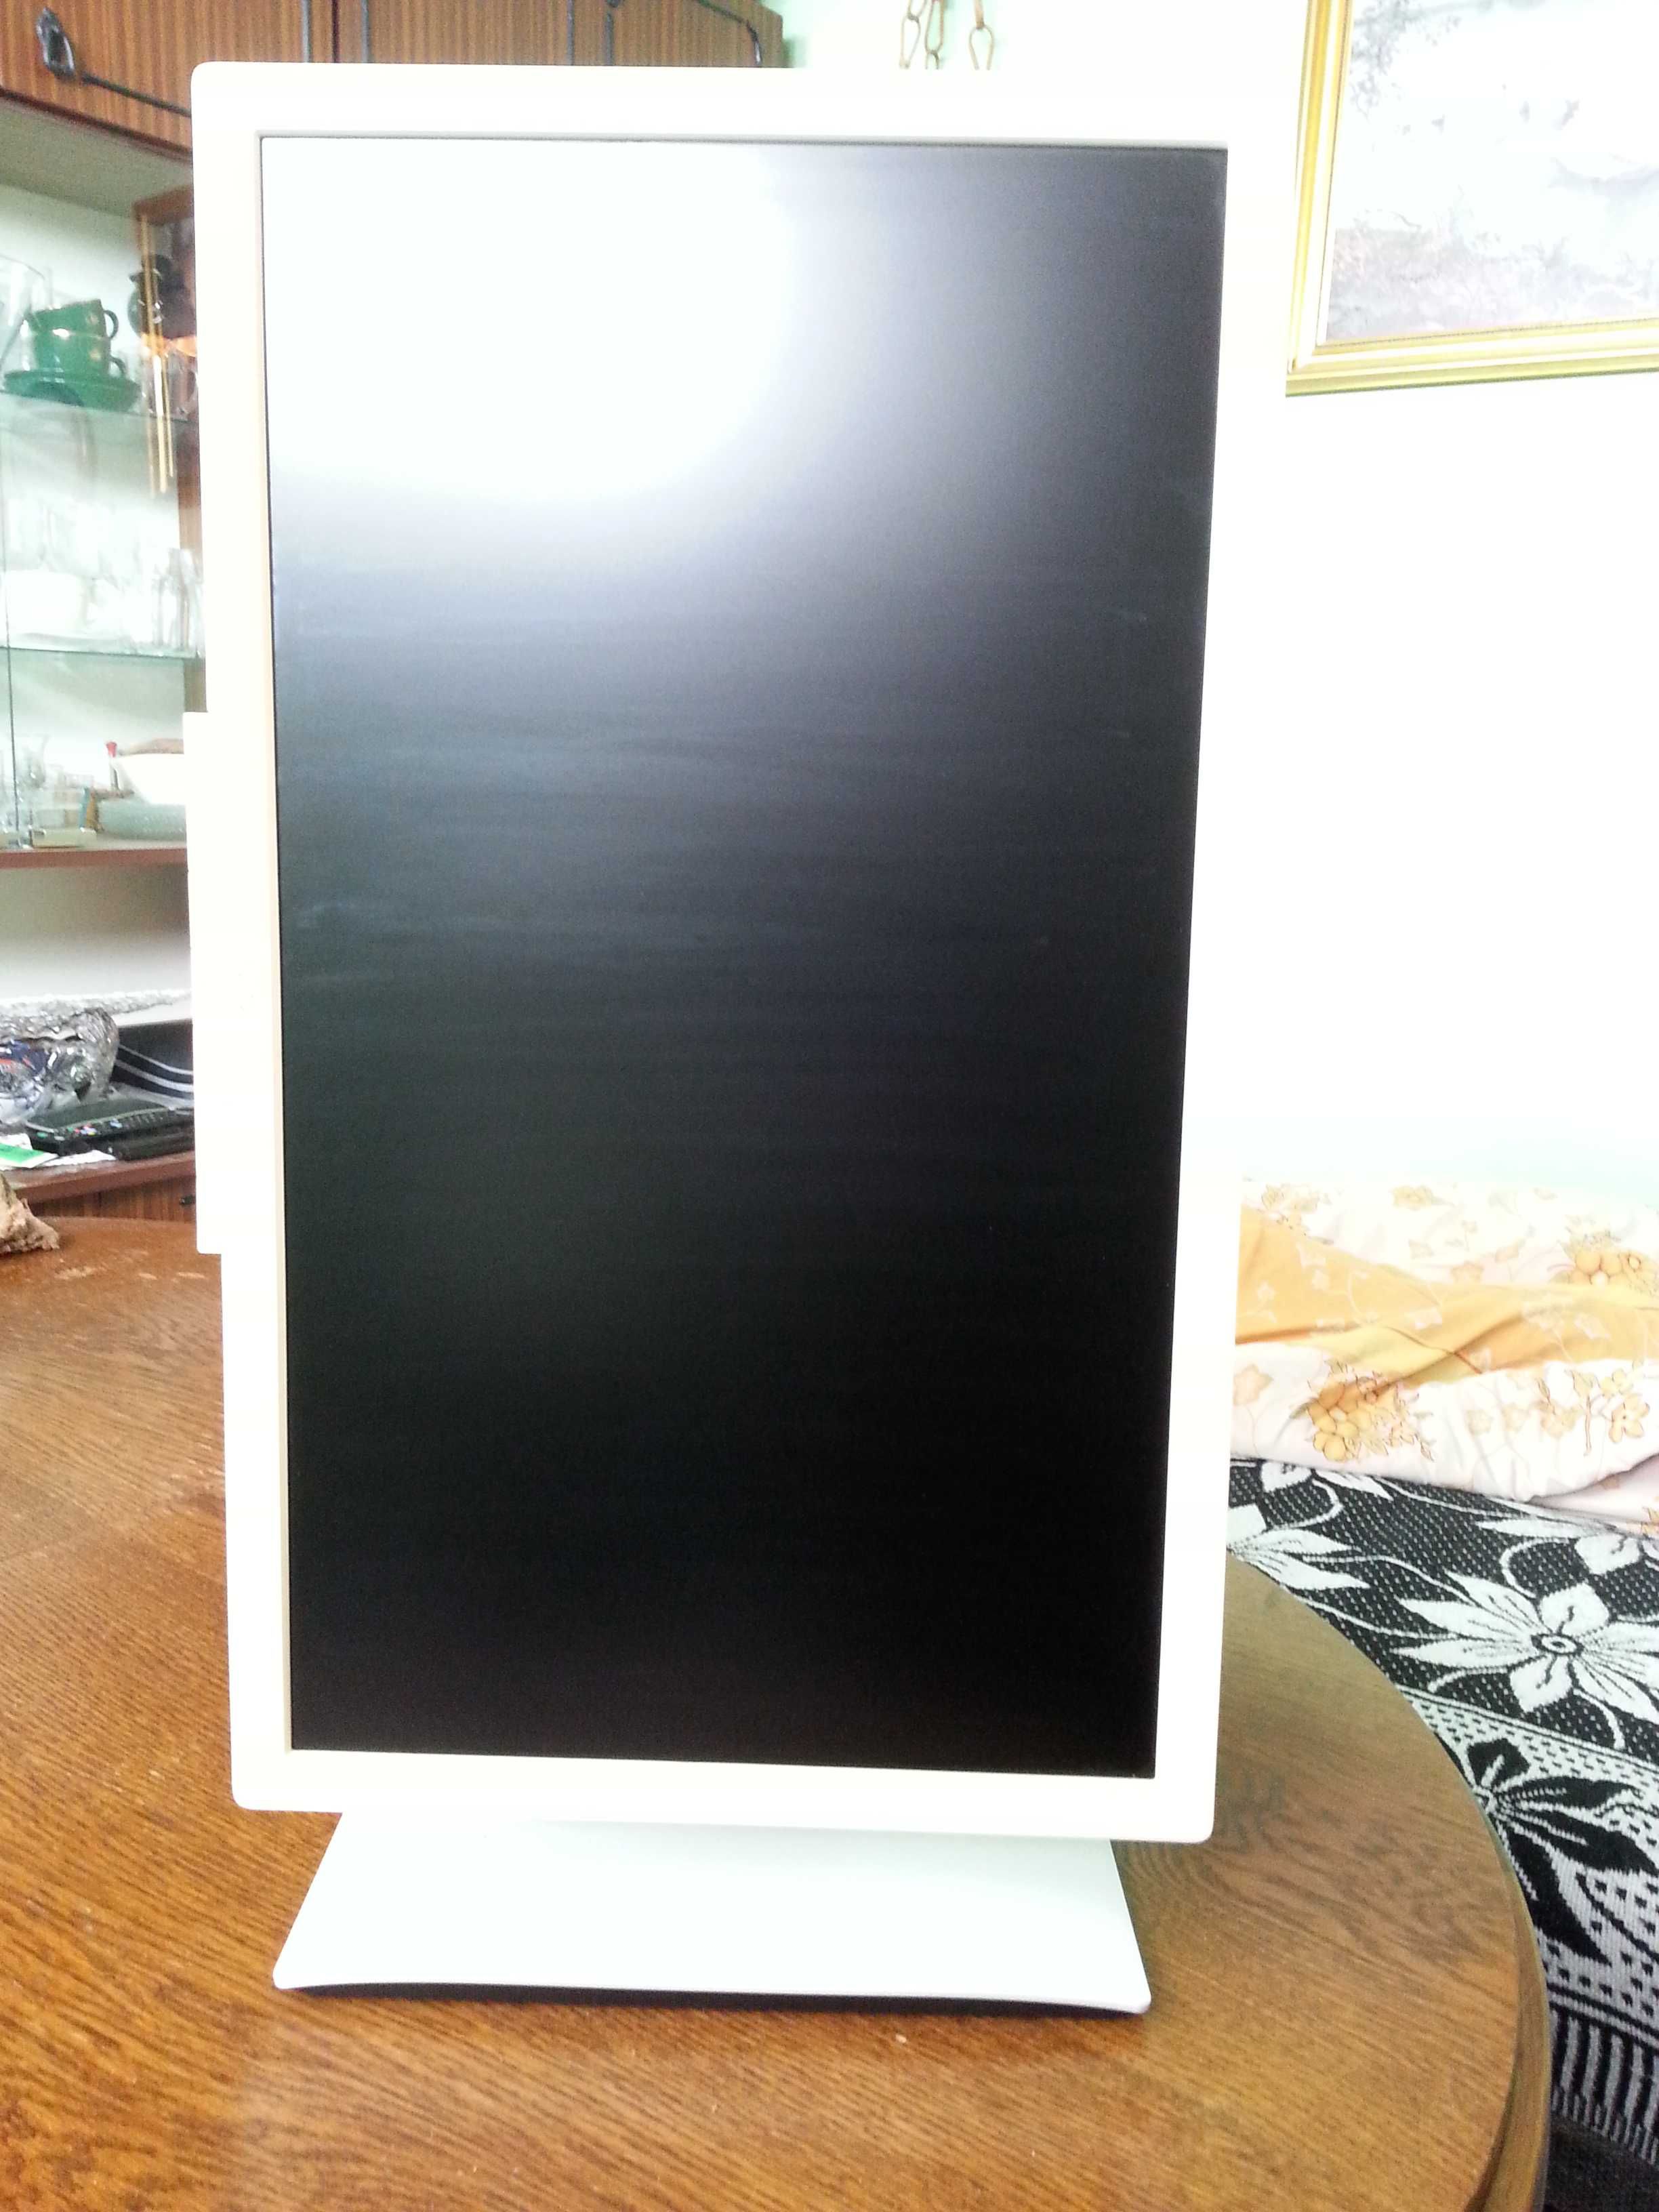 Sprzedam monitor Fujitsu 23'' LCD